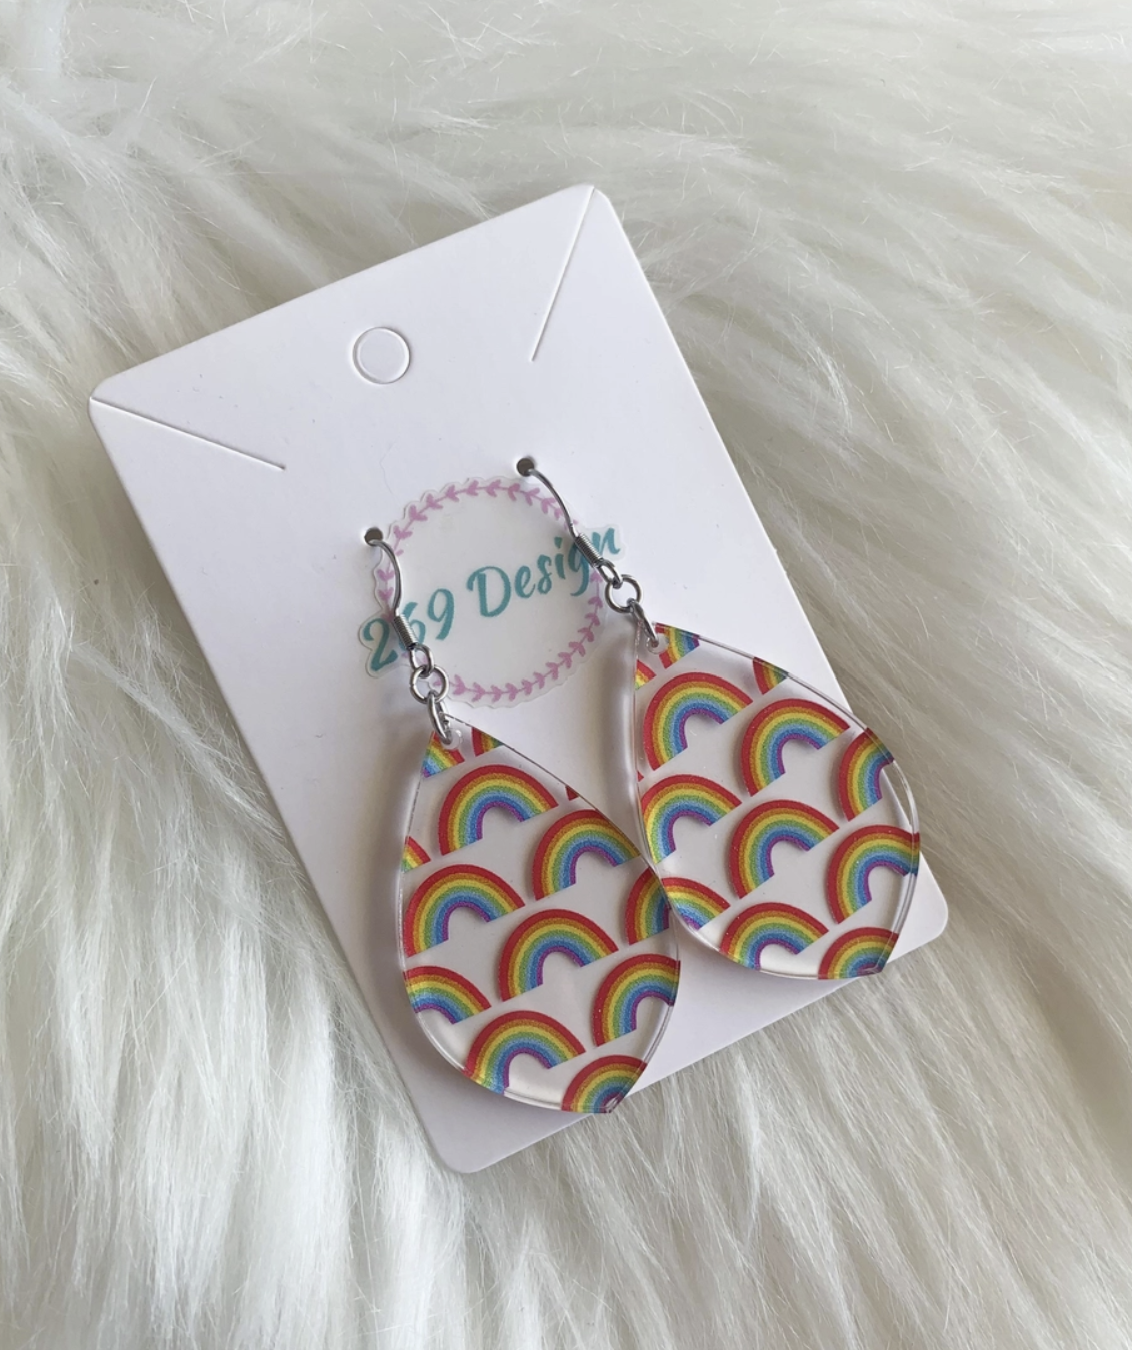 Rainbow earrings